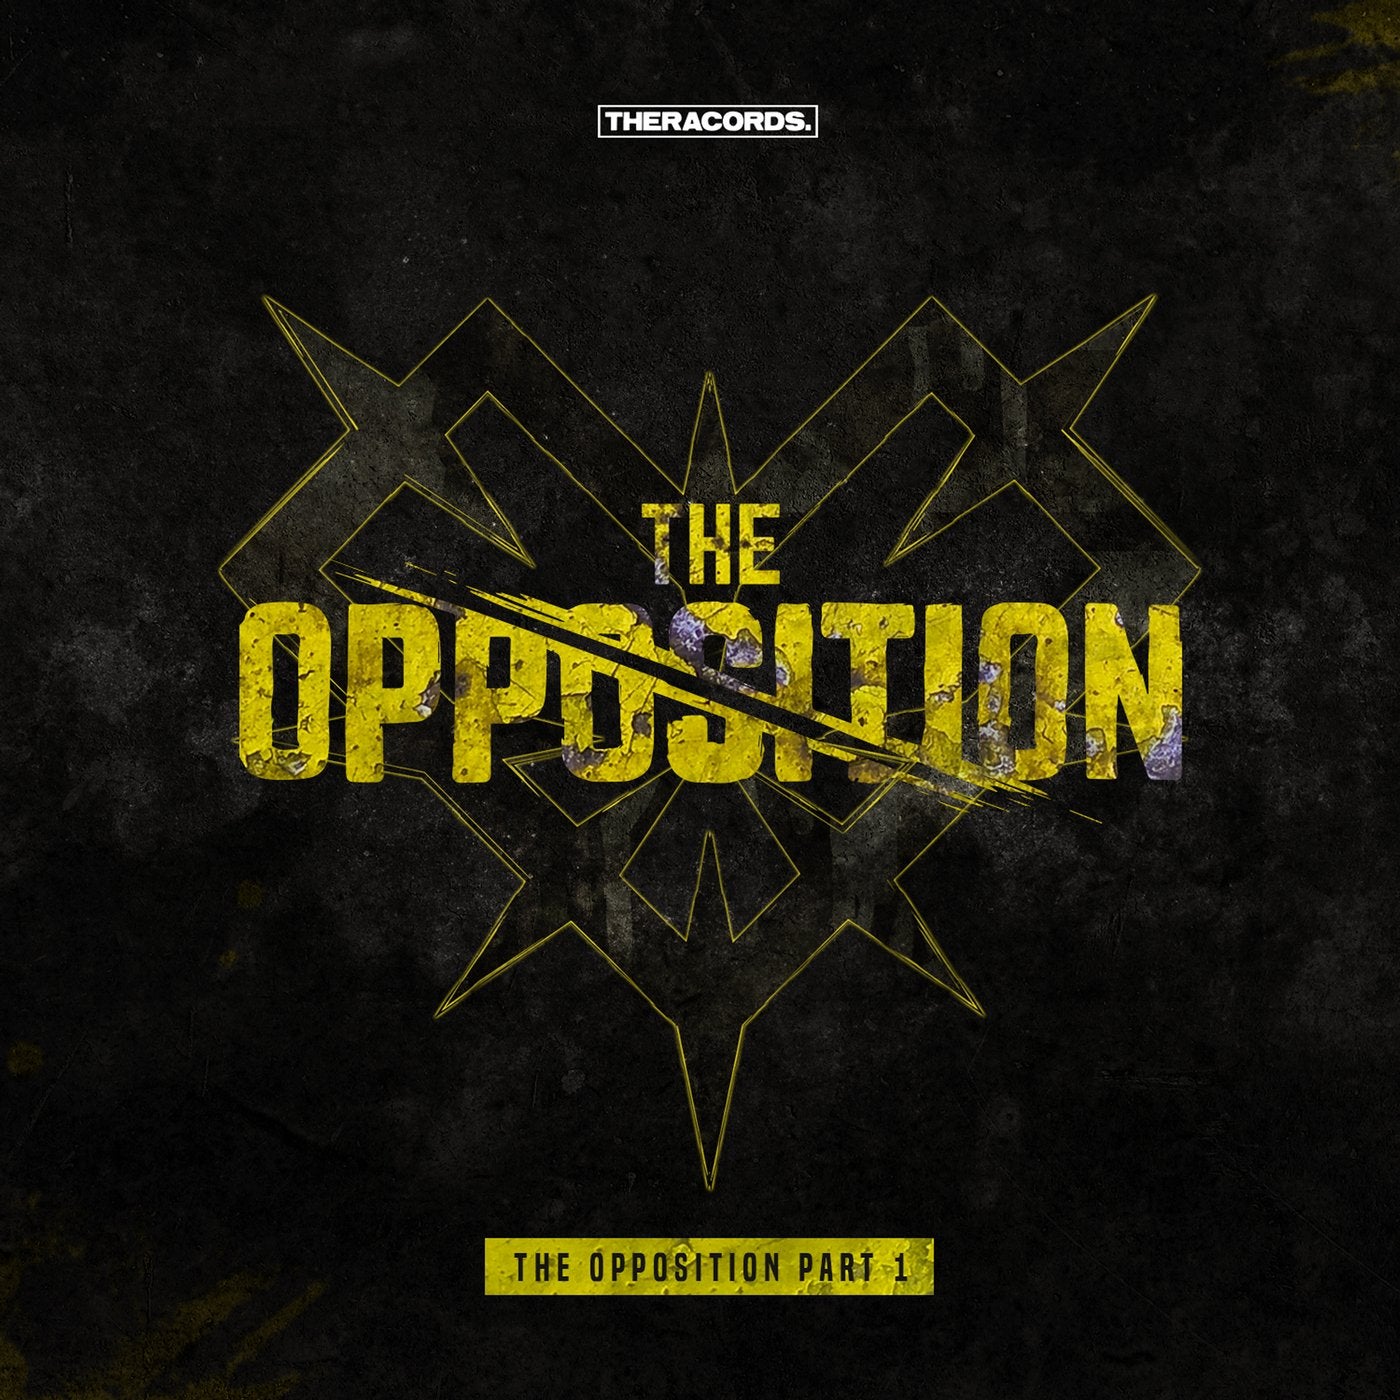 Starting cd. Opposition. Retaliation. Opposition Band. Carnivore Retaliation обложка.